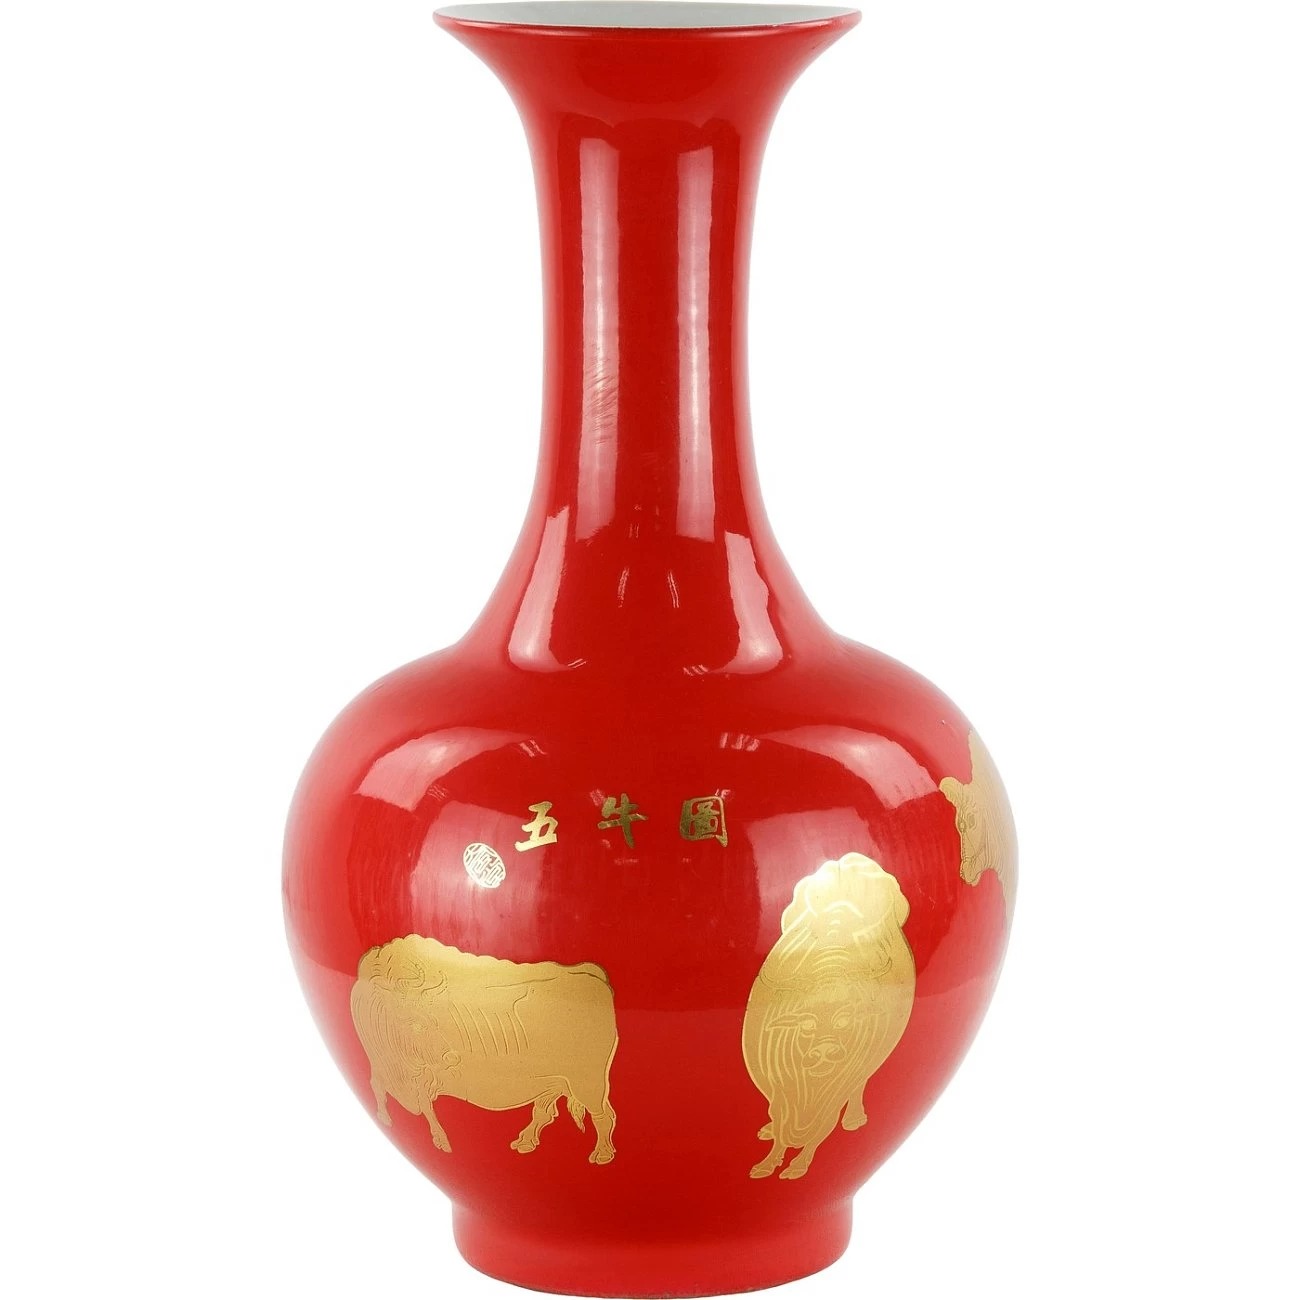 Ваза Glasar фарфоровая красная с быками 27х27х49 см ваза glasar фарфоровая мятного а и бронзовыми змеями 39 см